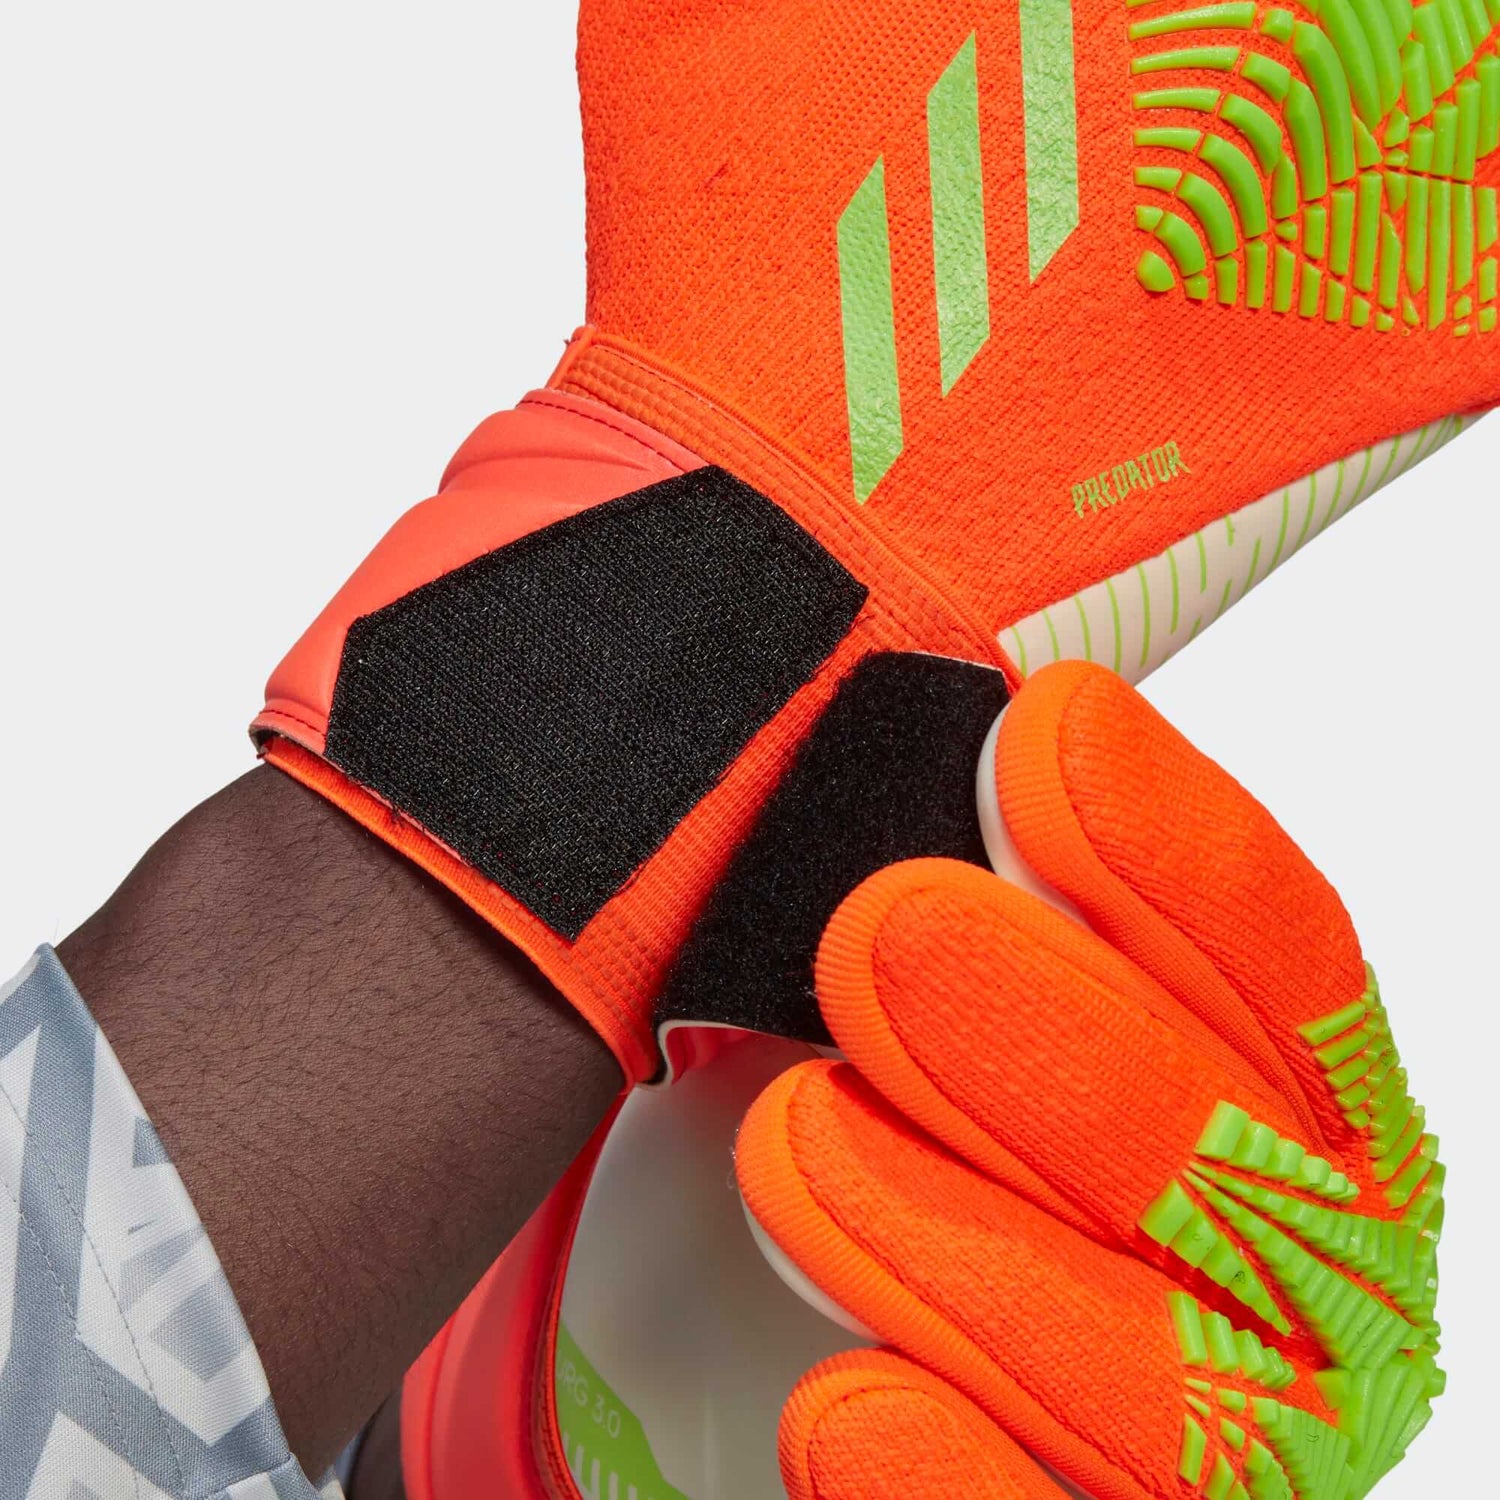 adidas Predator Pro GL Goalkeeper Gloves